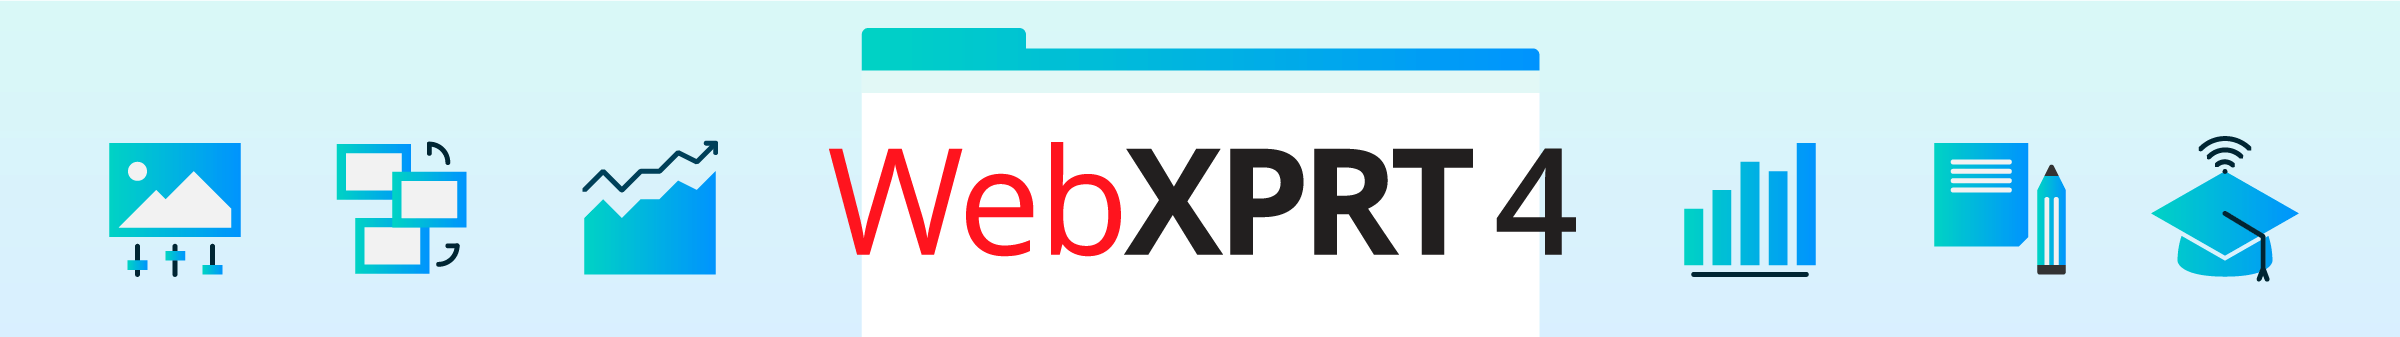 WebXPRT banner